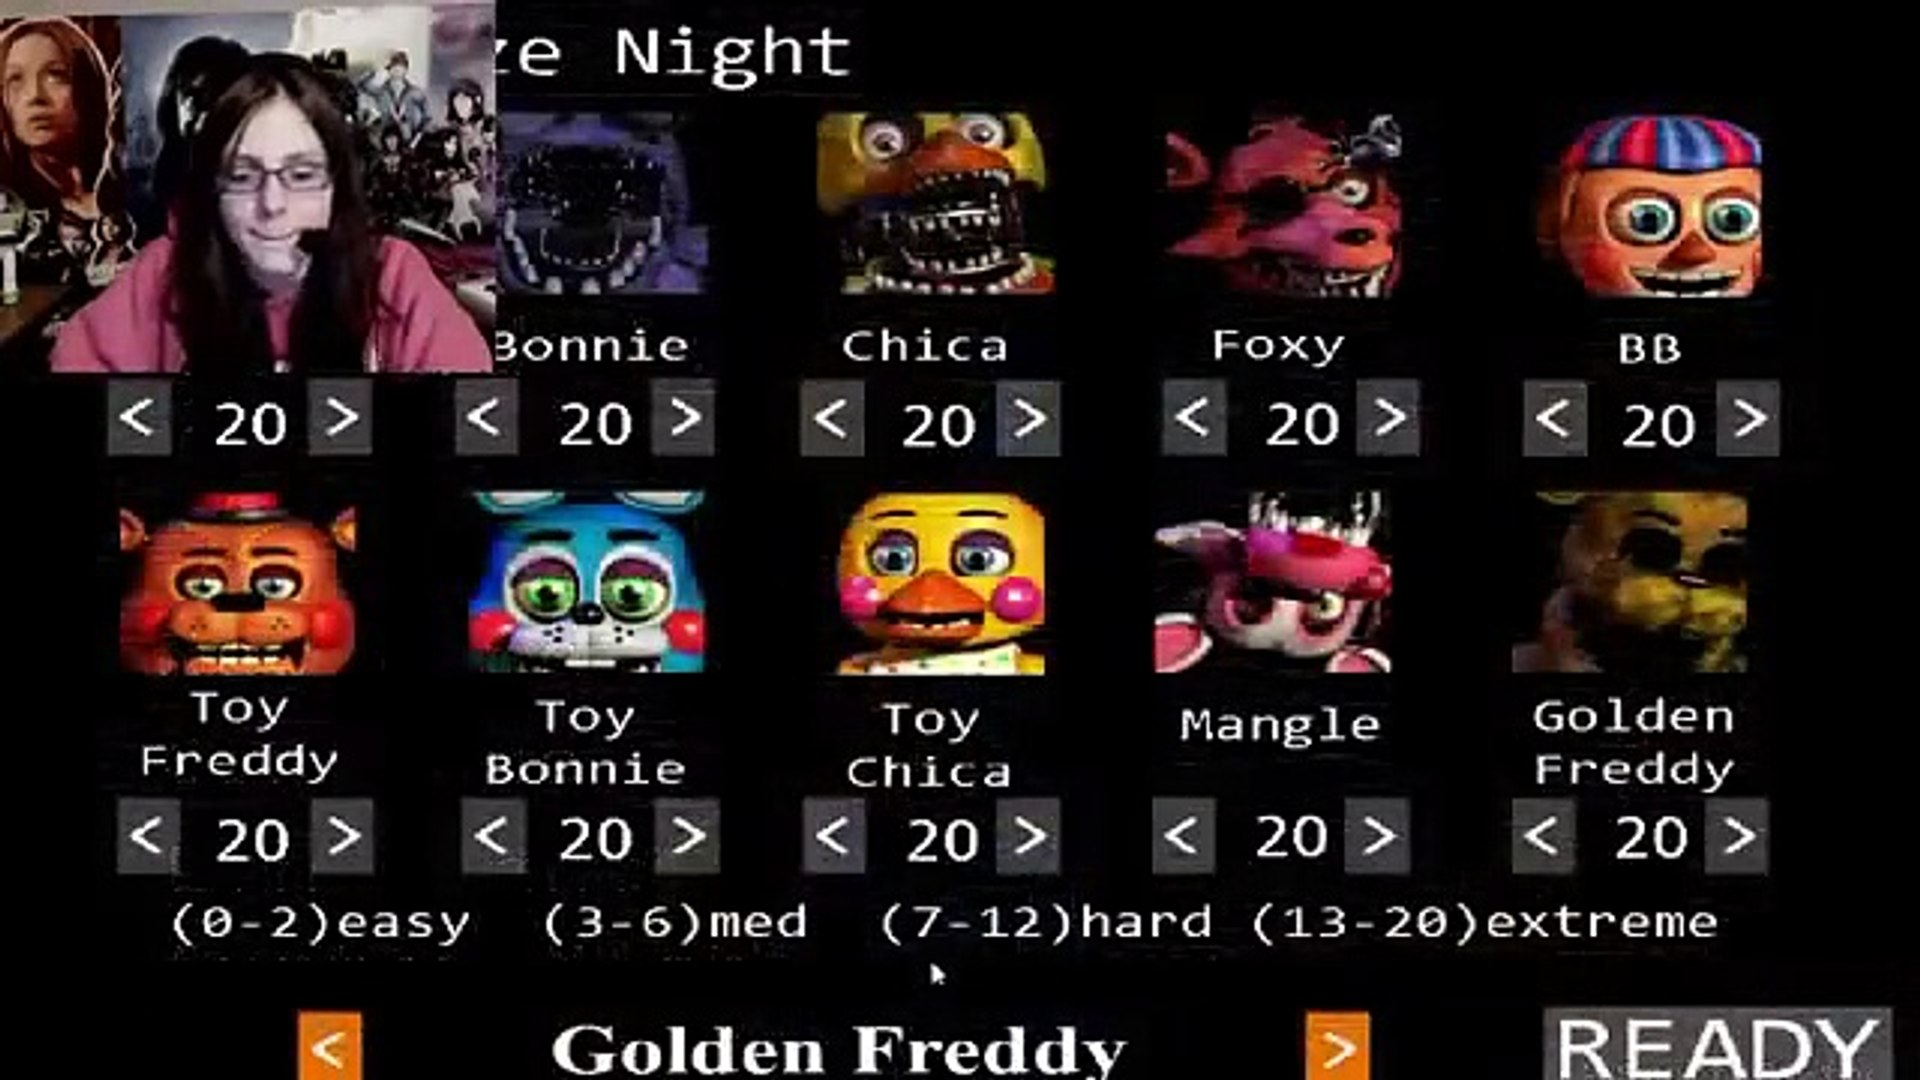 10 20 Golden Freddy Mode Fnaf 2 Night 7 Five Nights At Freddys 2 Garrys Mod Venturiantale - fnaf 2 golden freddy head